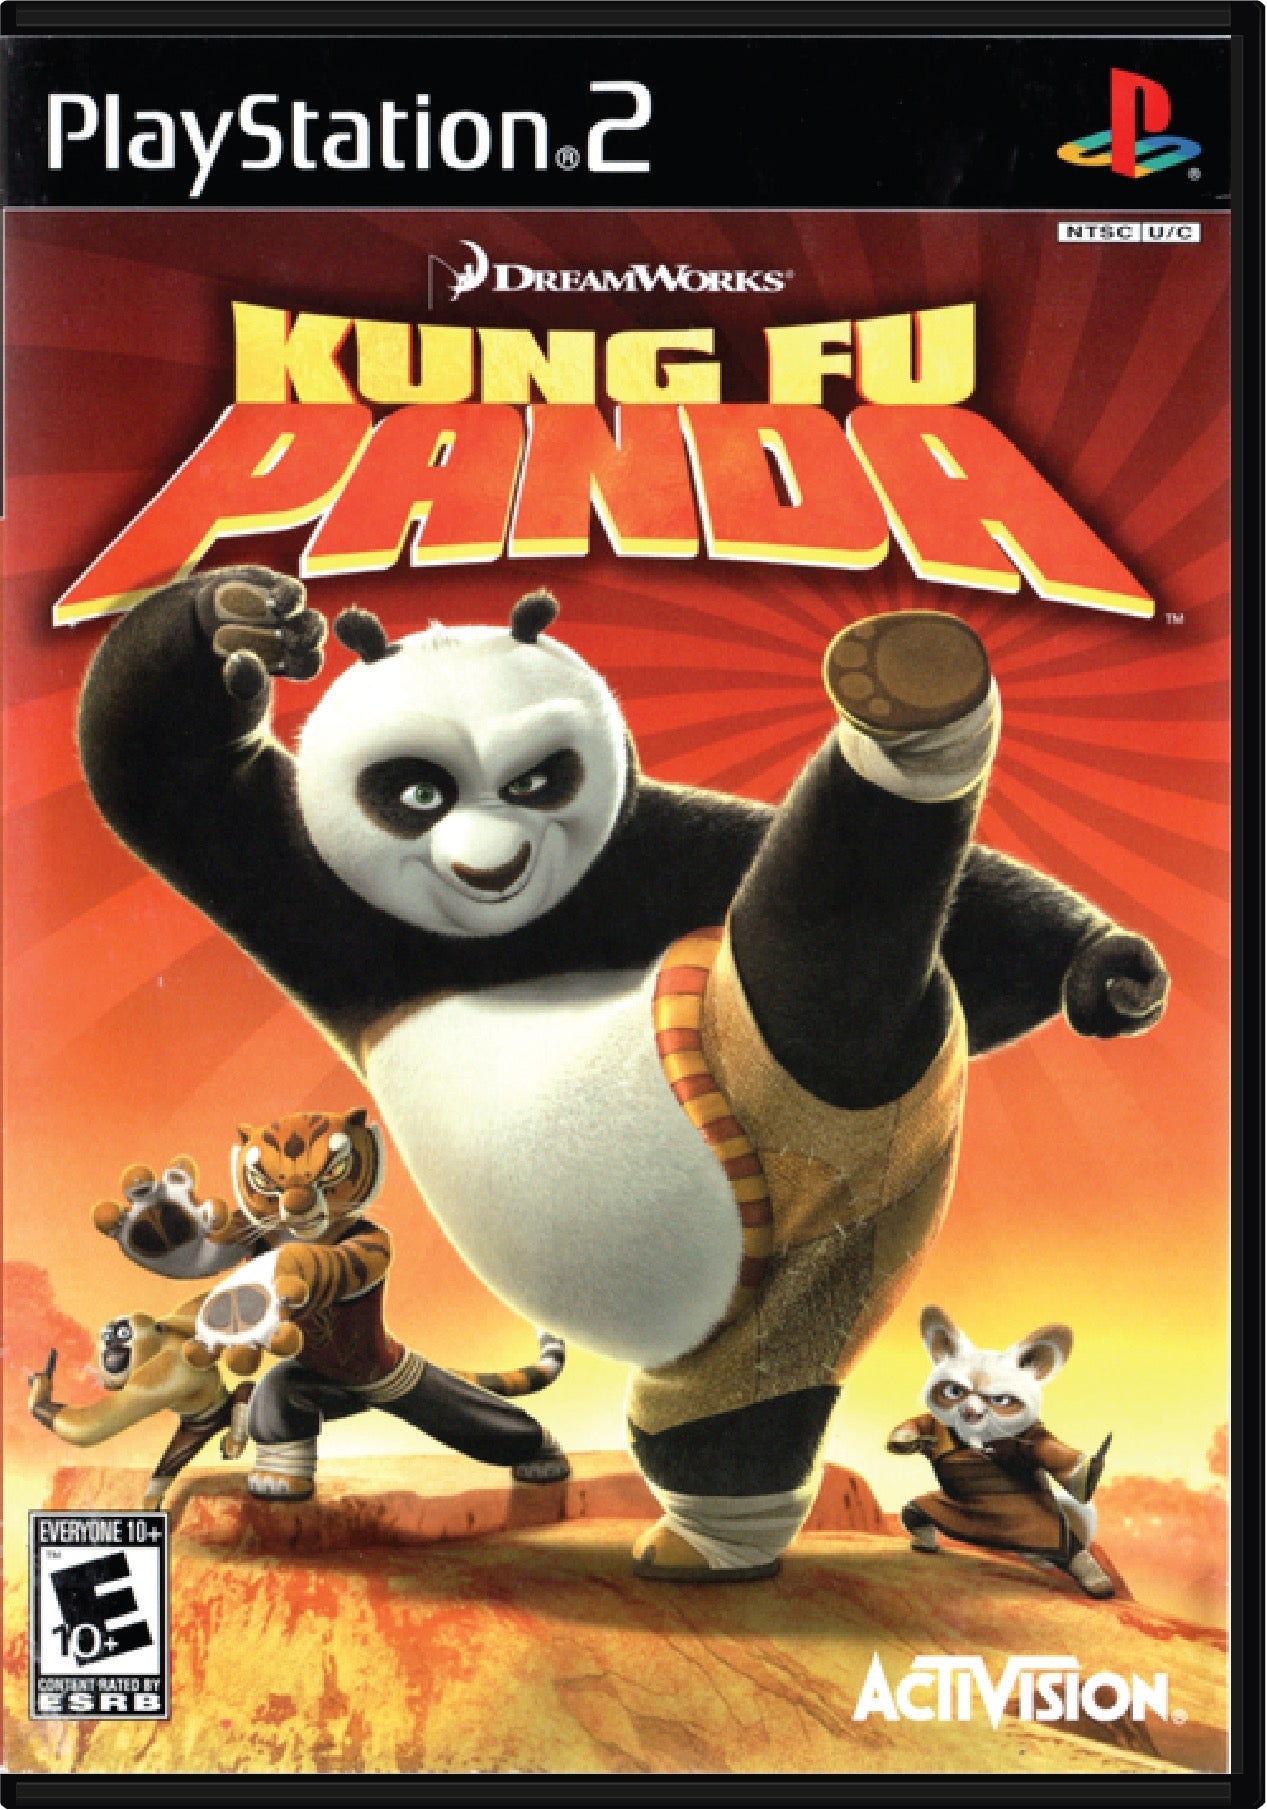 Kung Fu Panda Cover Art and Product Photo